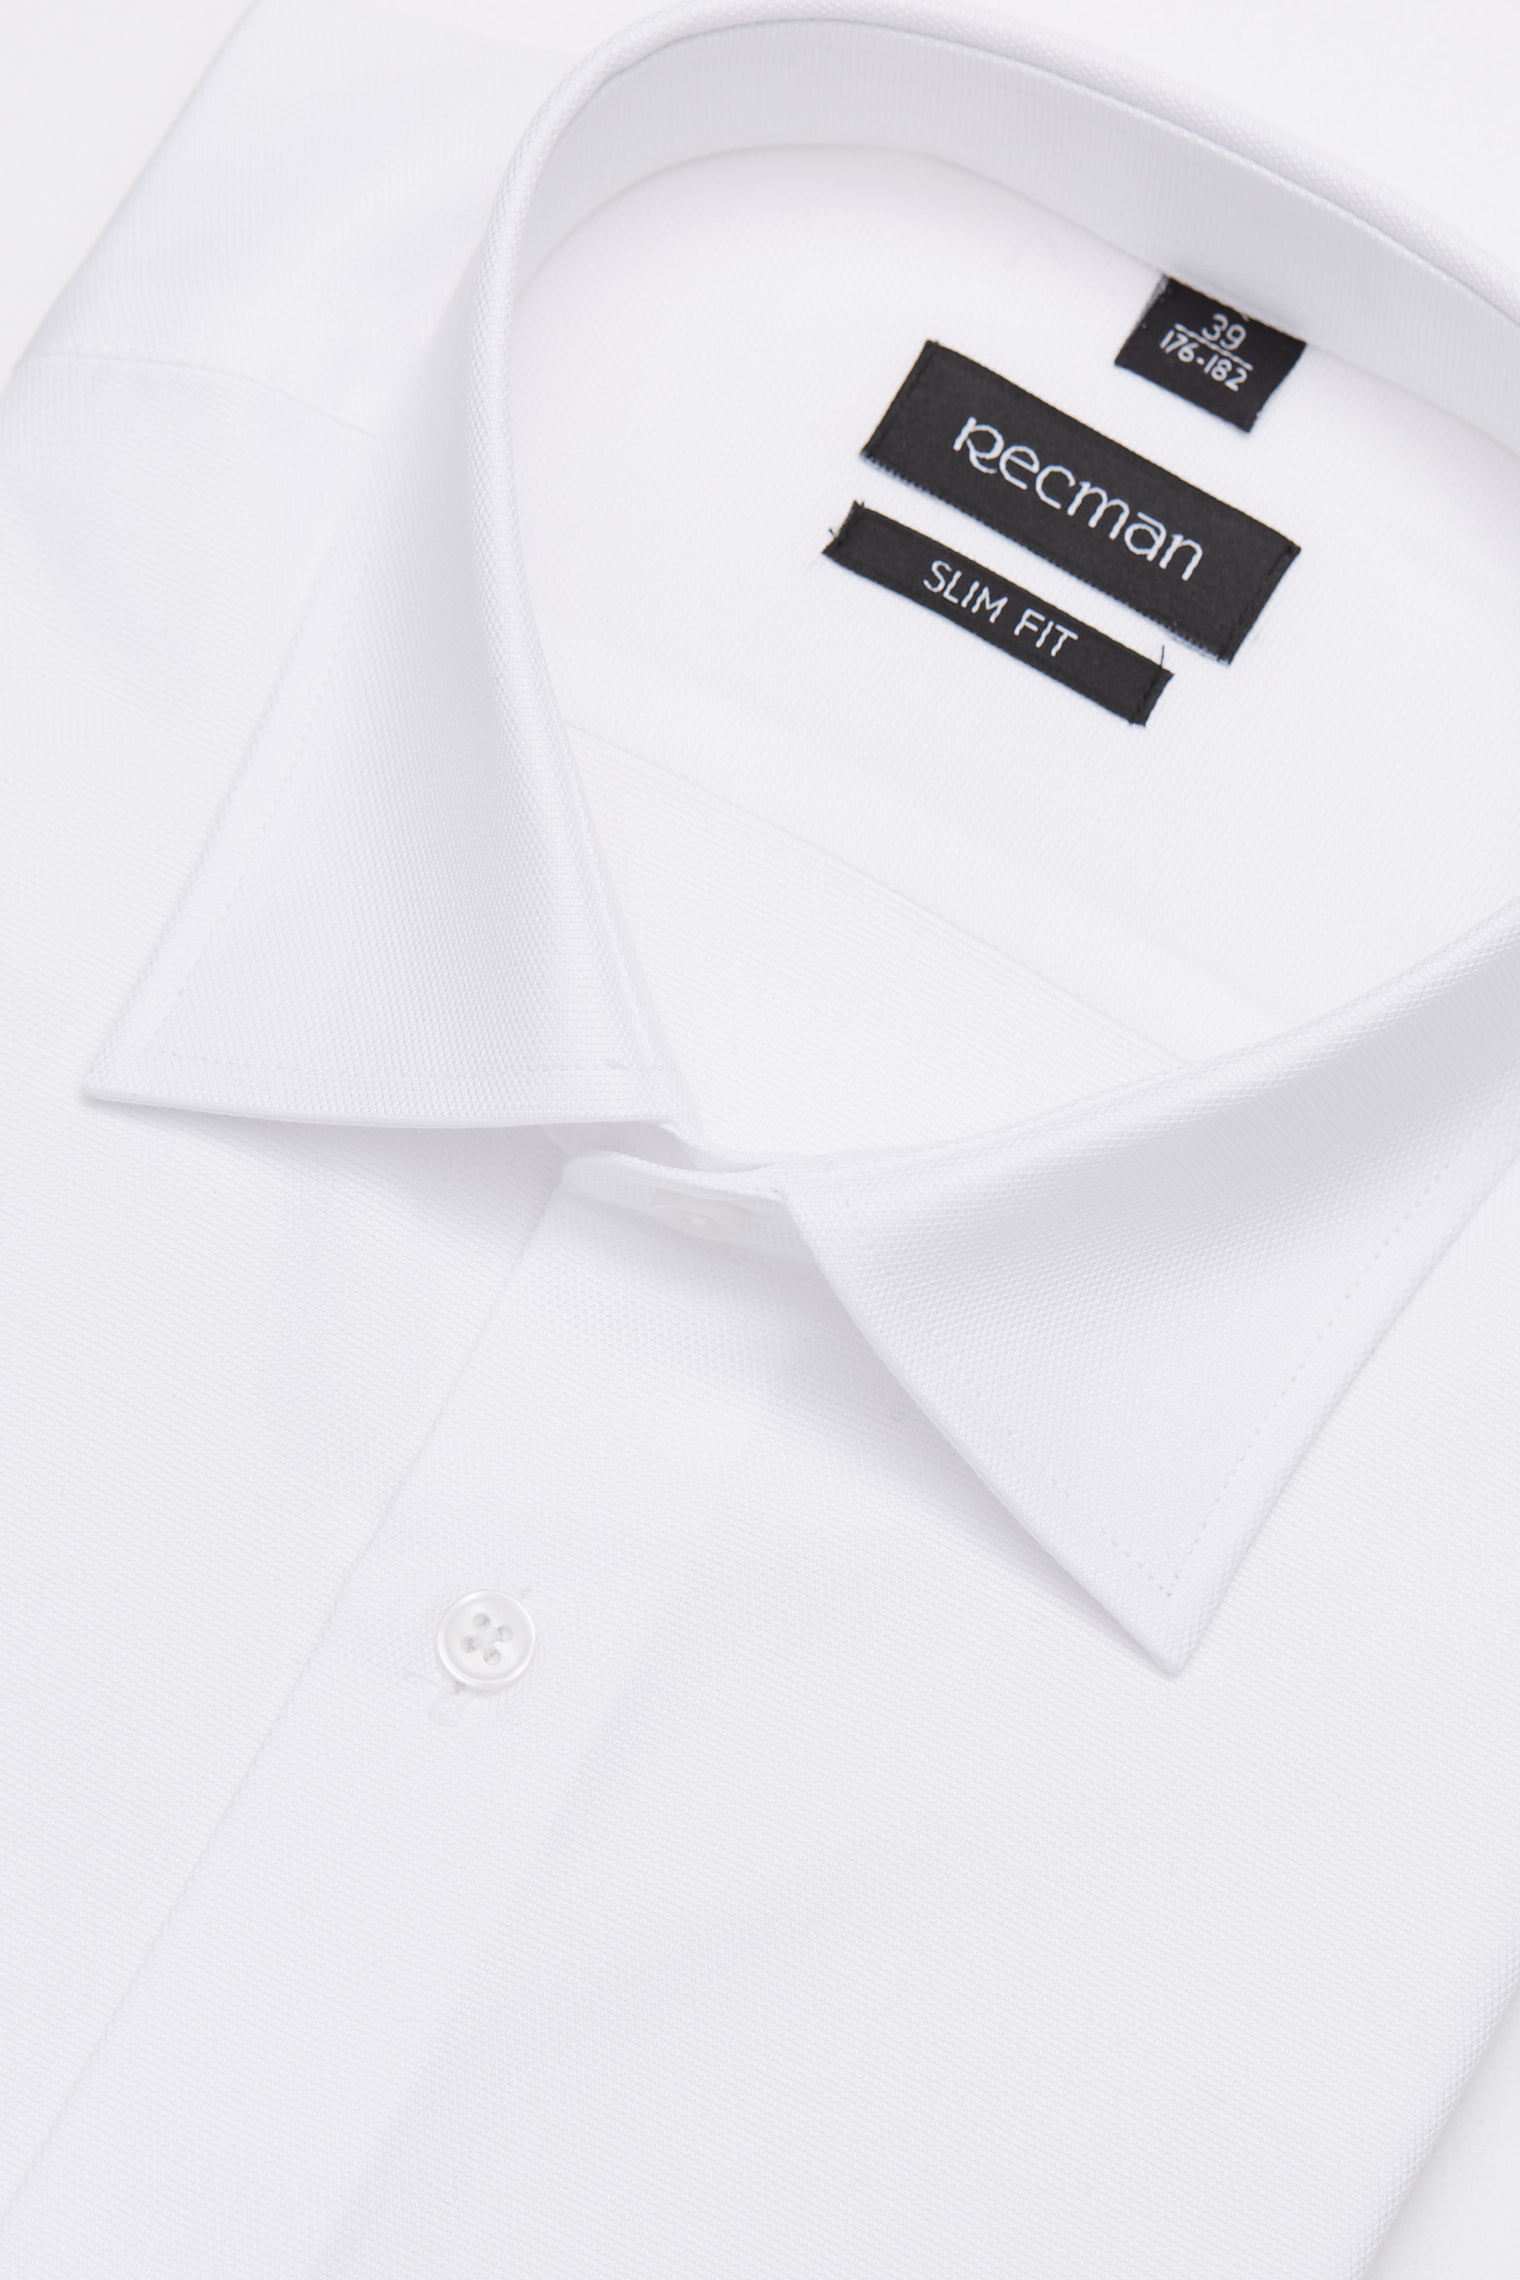 Elegancka biała koszula męska Recman CORSINI 5017A slim fit Recman